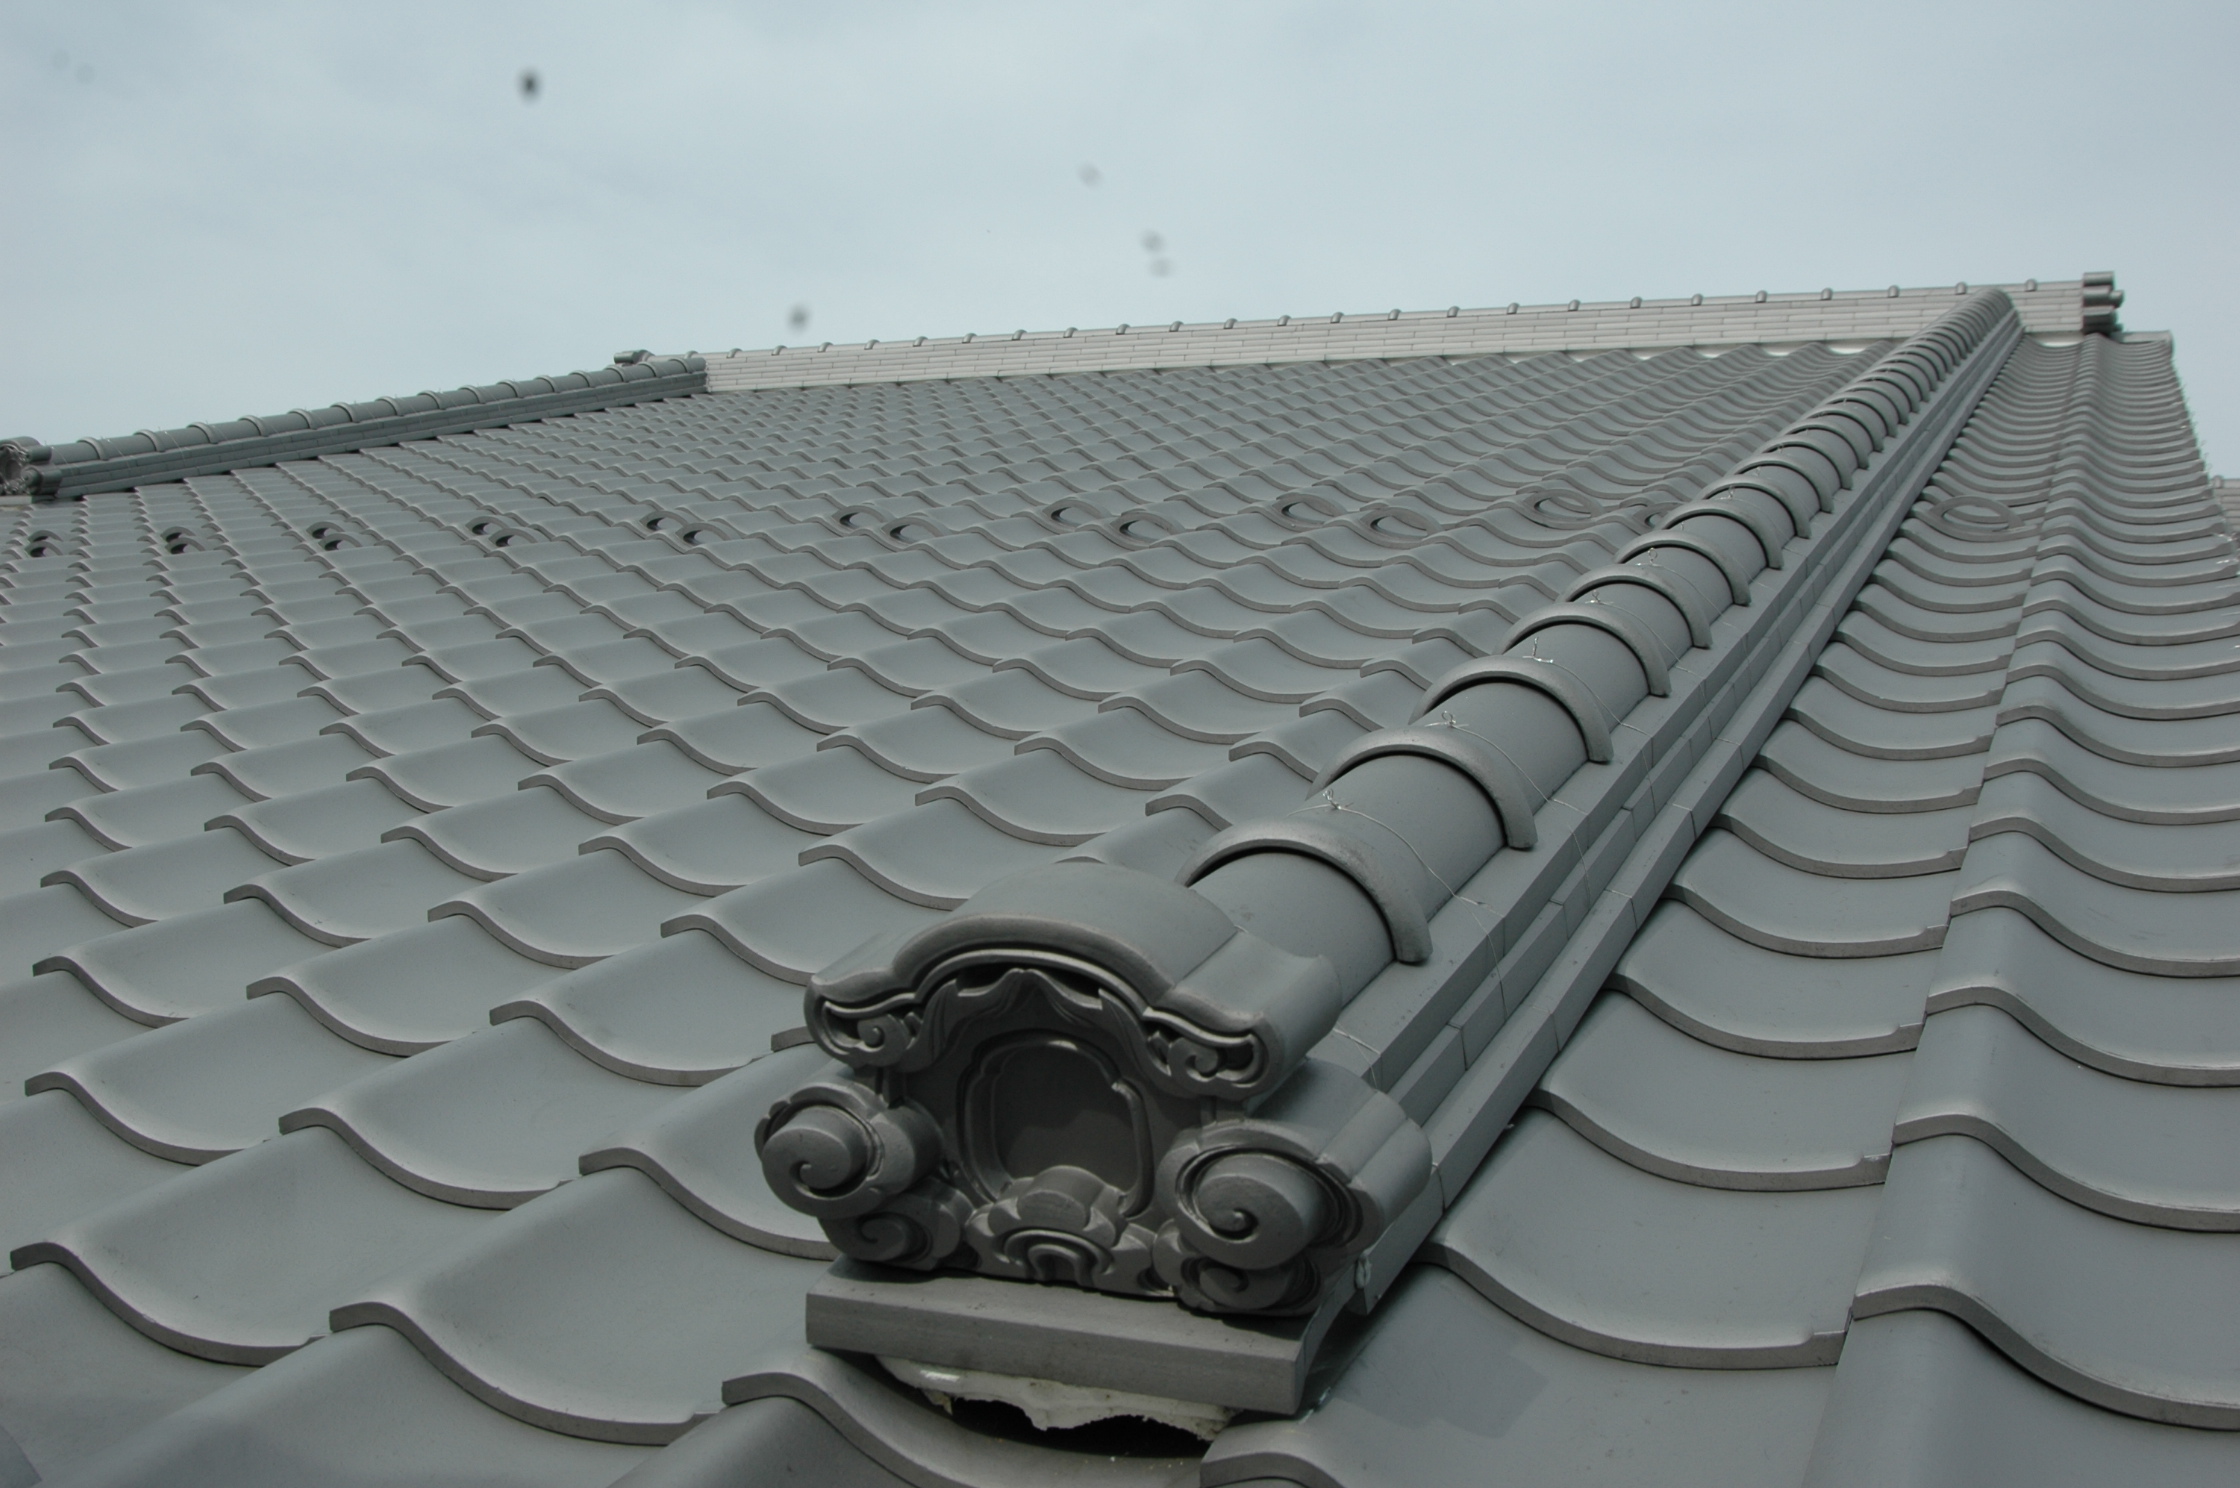 Suzuki Roof Co Ltd, Japanese Roof Tiles